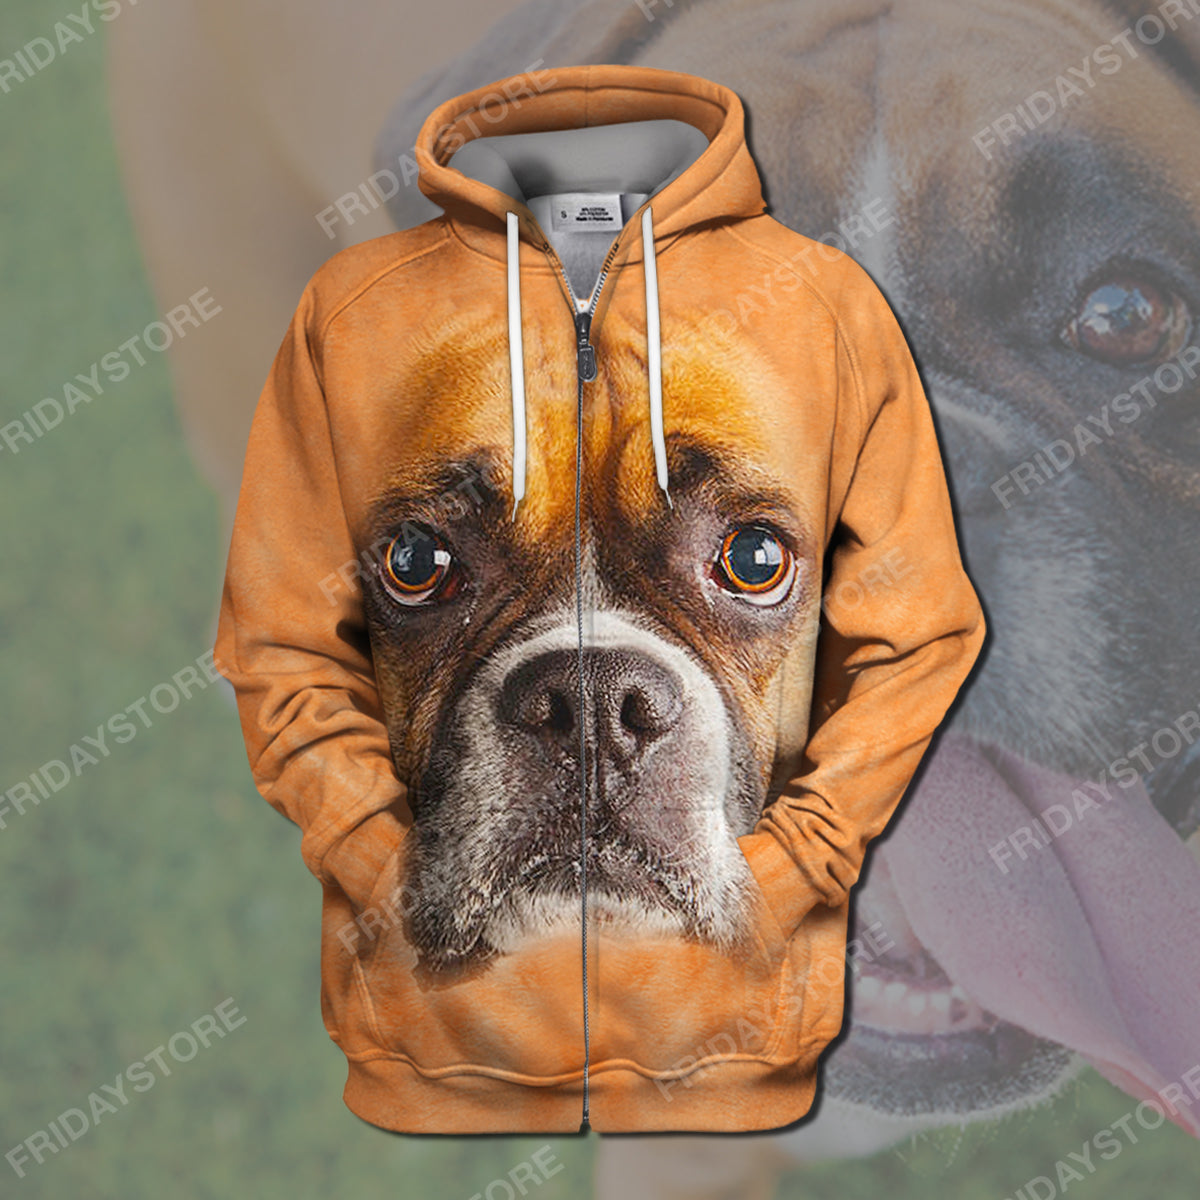 Unifinz Dog T-shirt Boxer Dog HoodieBoxer Dog Graphic Orange T Shirt Awesome Dog Hoodie Sweater Tank Apparel 2026